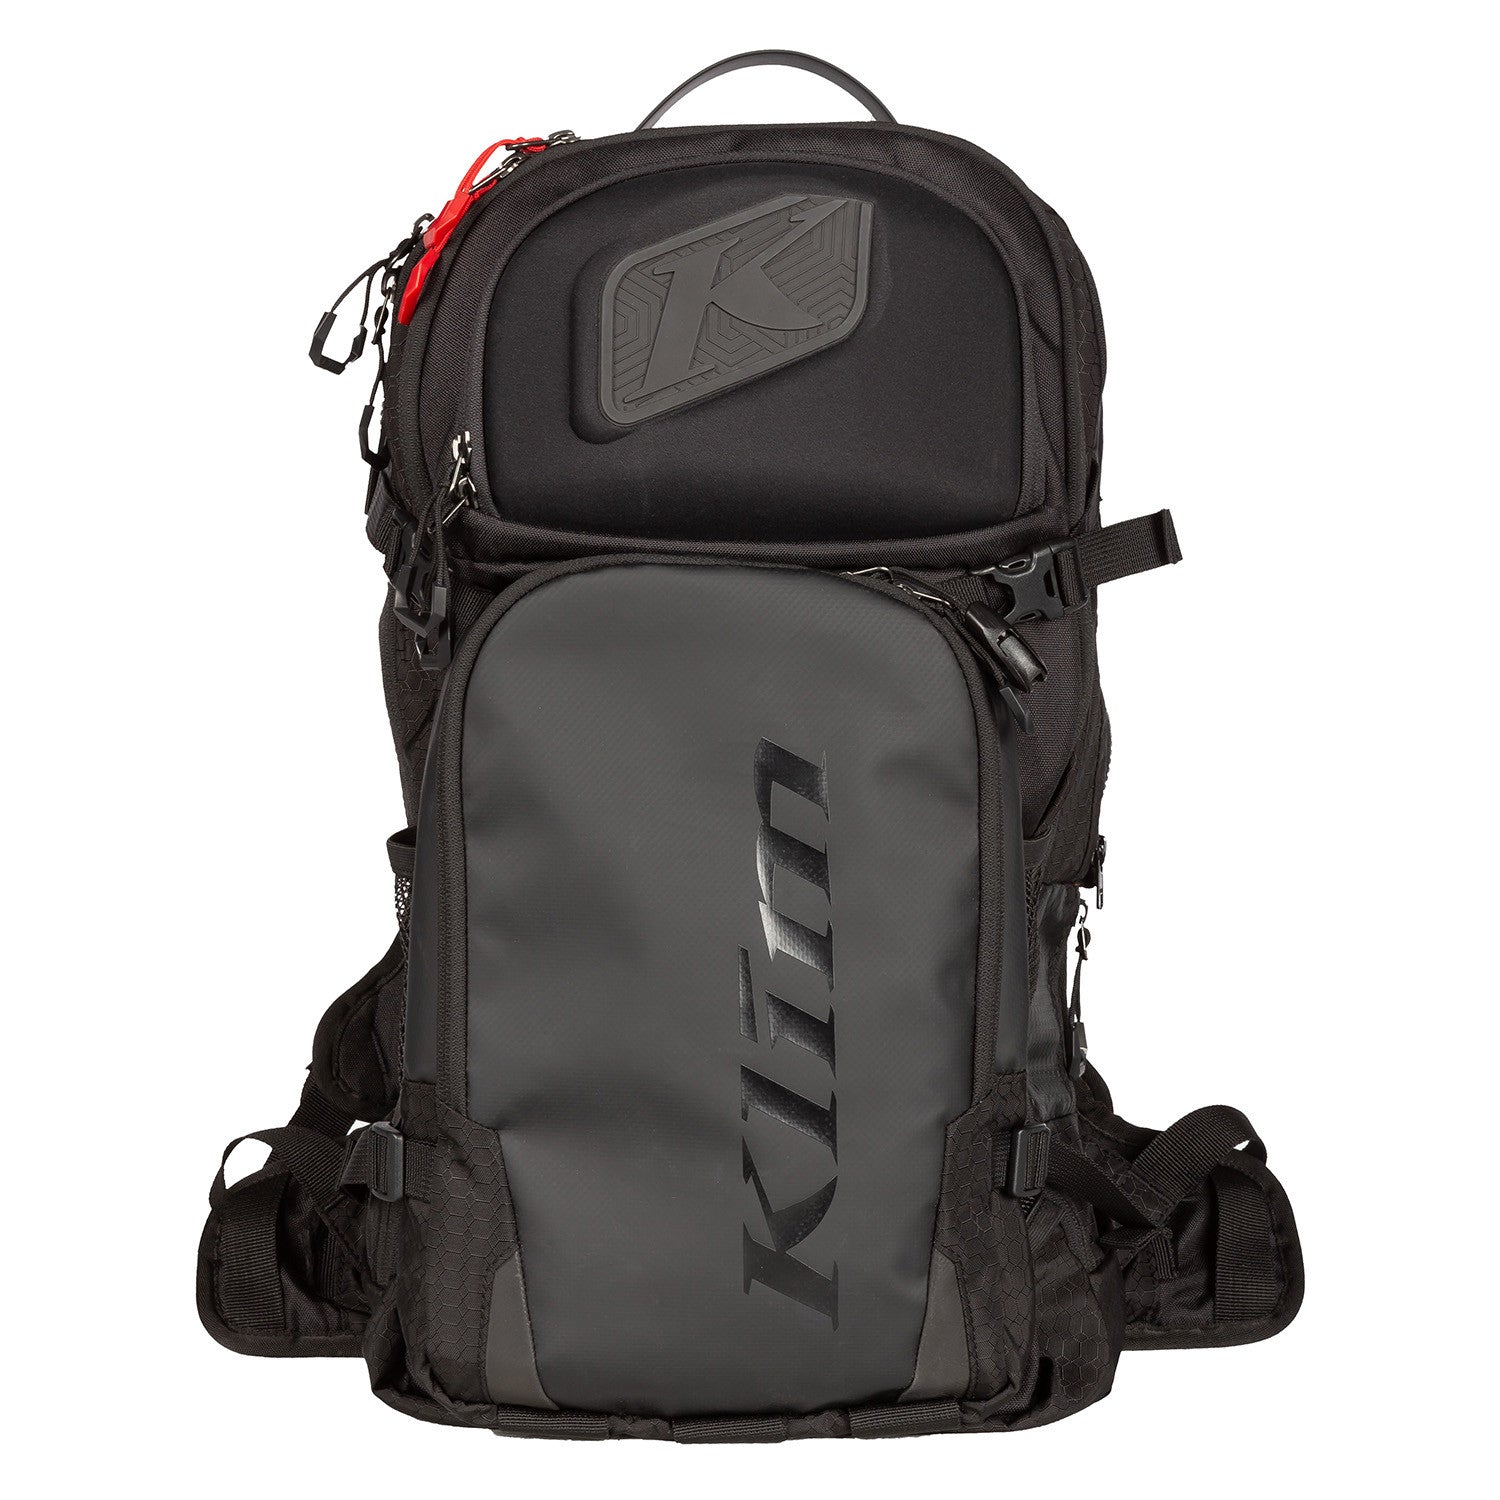 Klim Nac Pak Backpack - Lowest Price Guarantee | 24MX